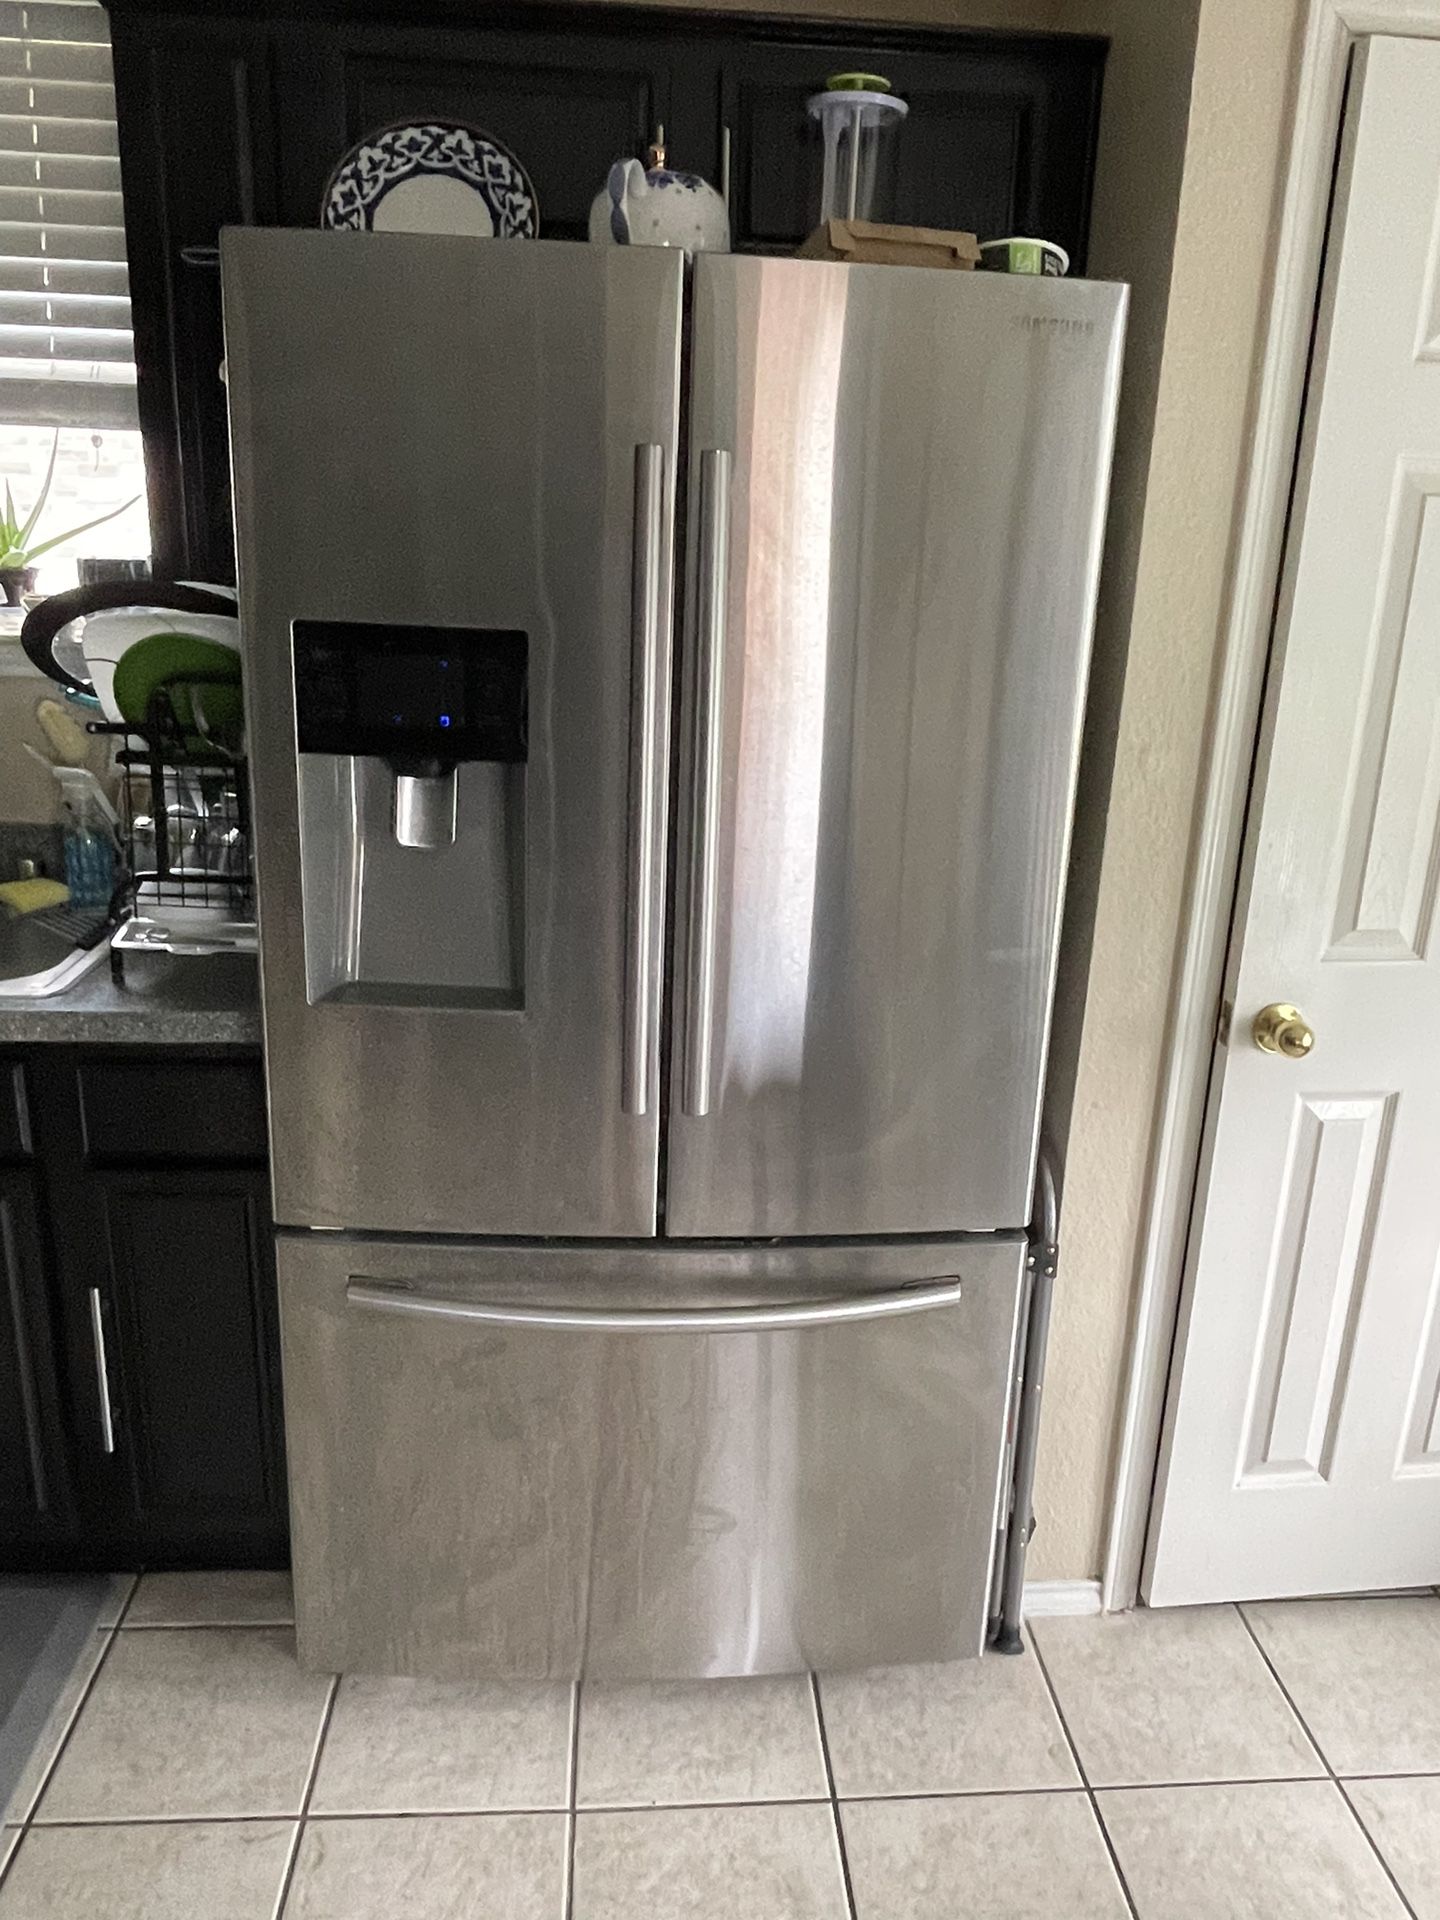 Samsung Refrigerator, Stove, Microwave And Dishwasher 